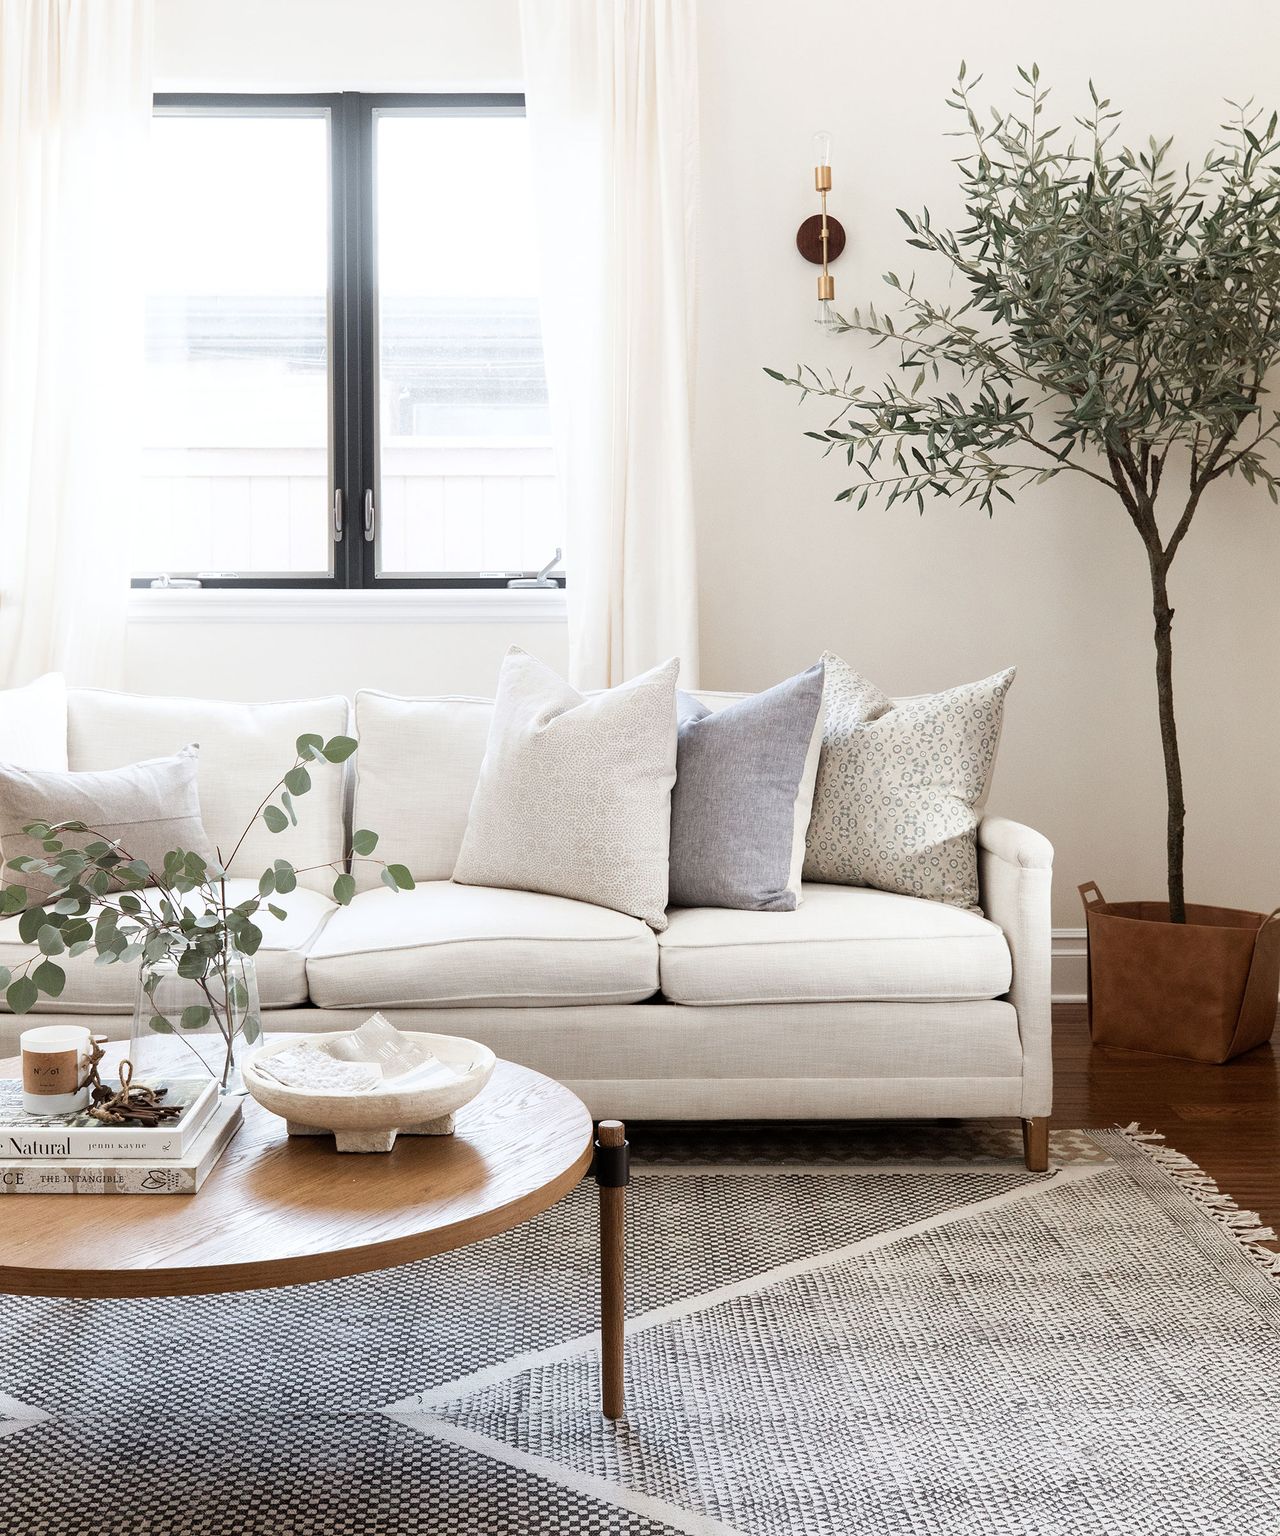 Rustic living room ideas: 10 ways to introduce a farmhouse feel